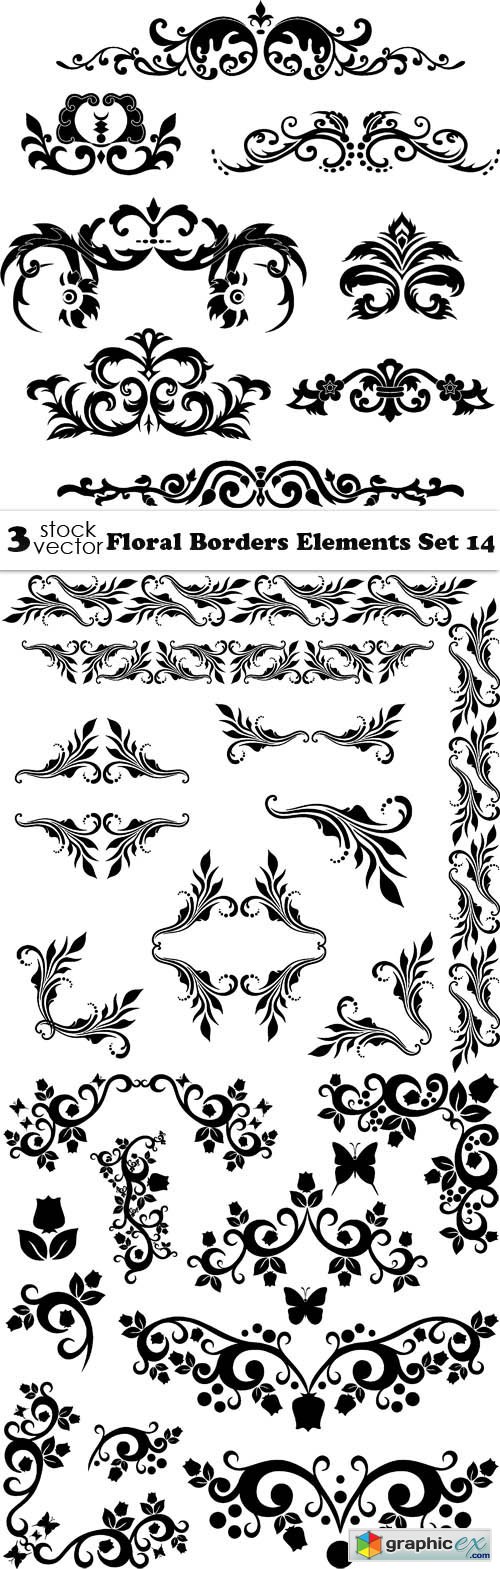 Floral Borders Elements Set 14